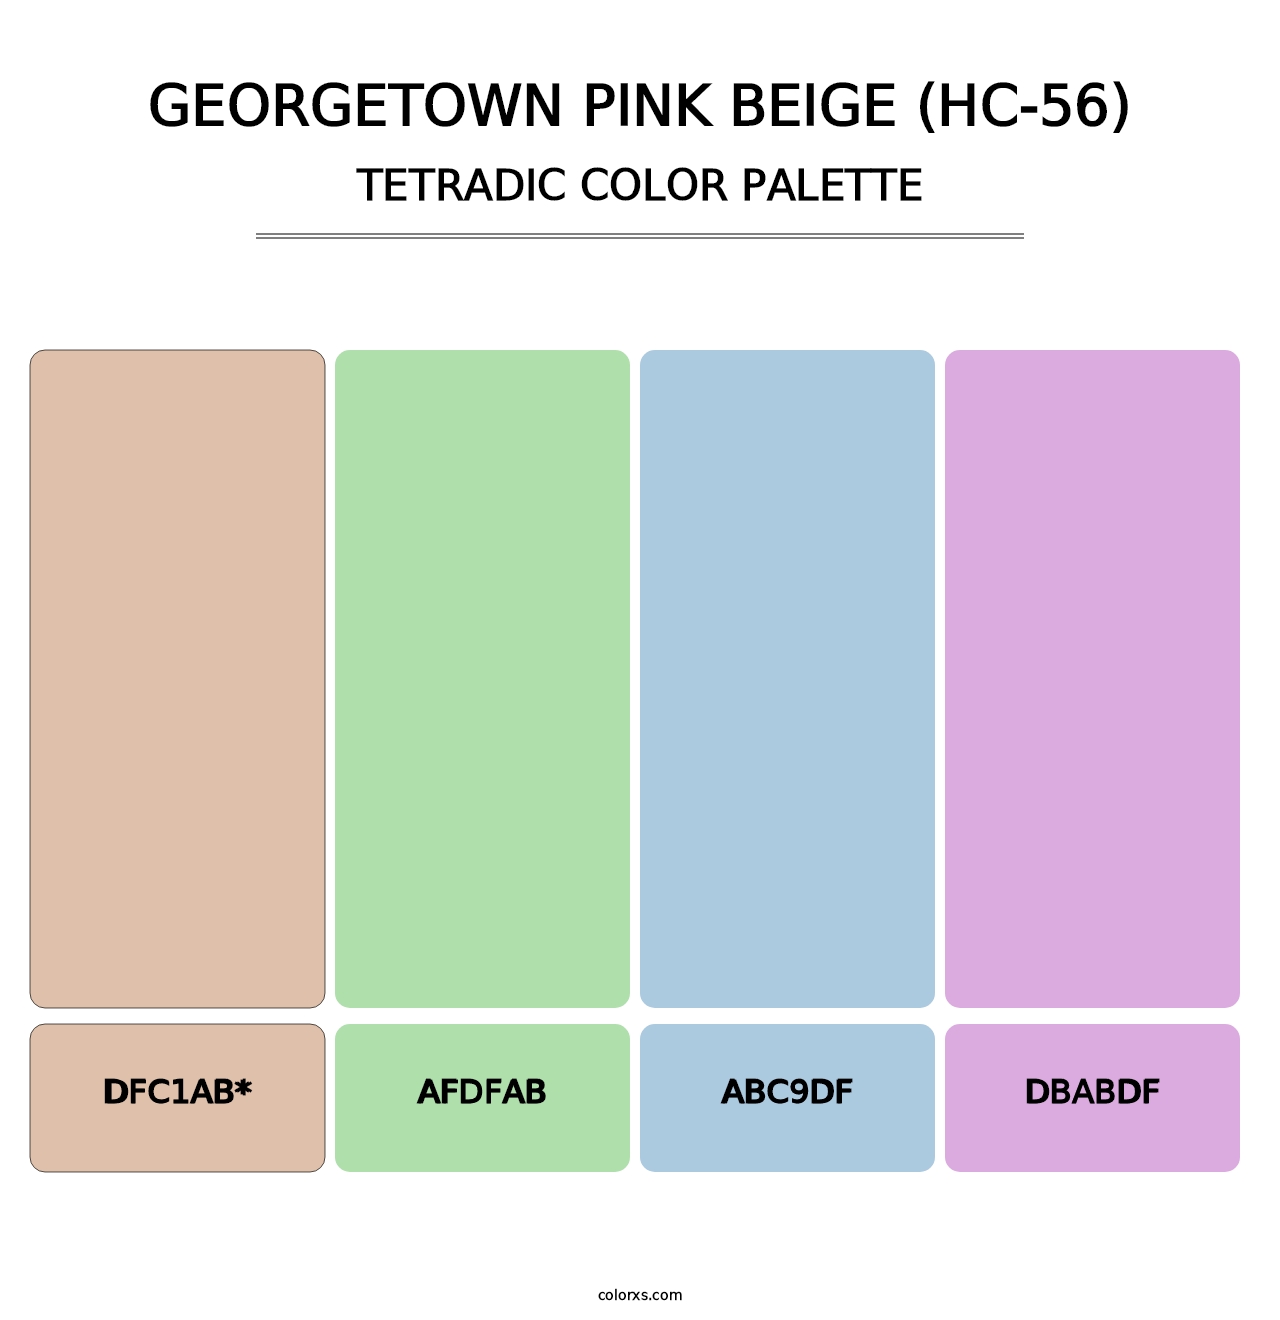 Georgetown Pink Beige (HC-56) - Tetradic Color Palette